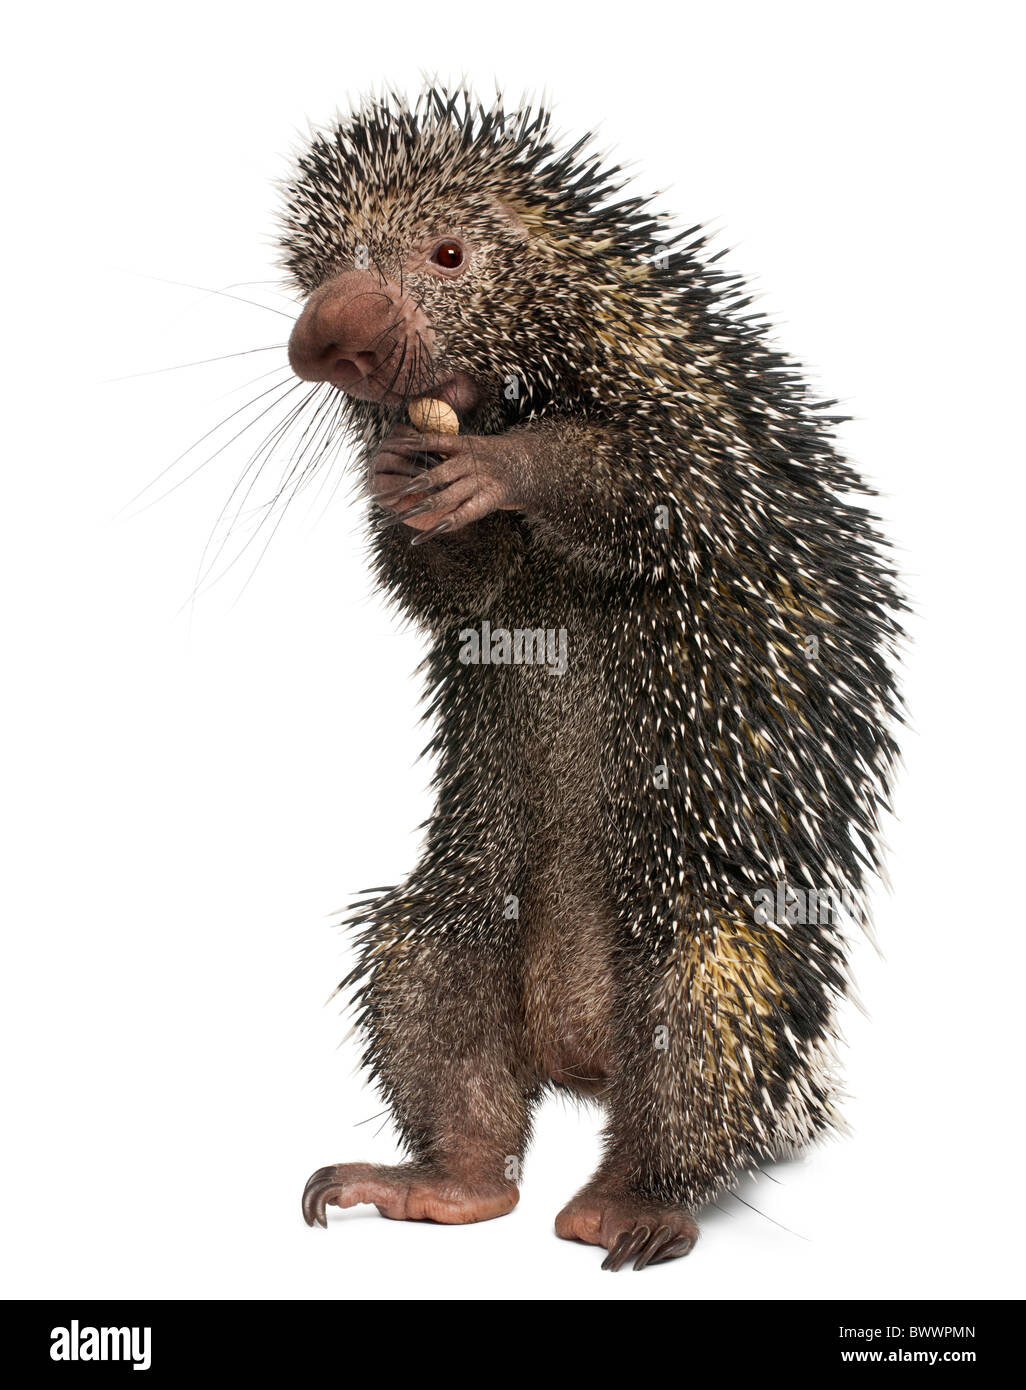 Brazilian Porcupine, Coendou prehensilis, eating peanut in front of white background Stock Photo